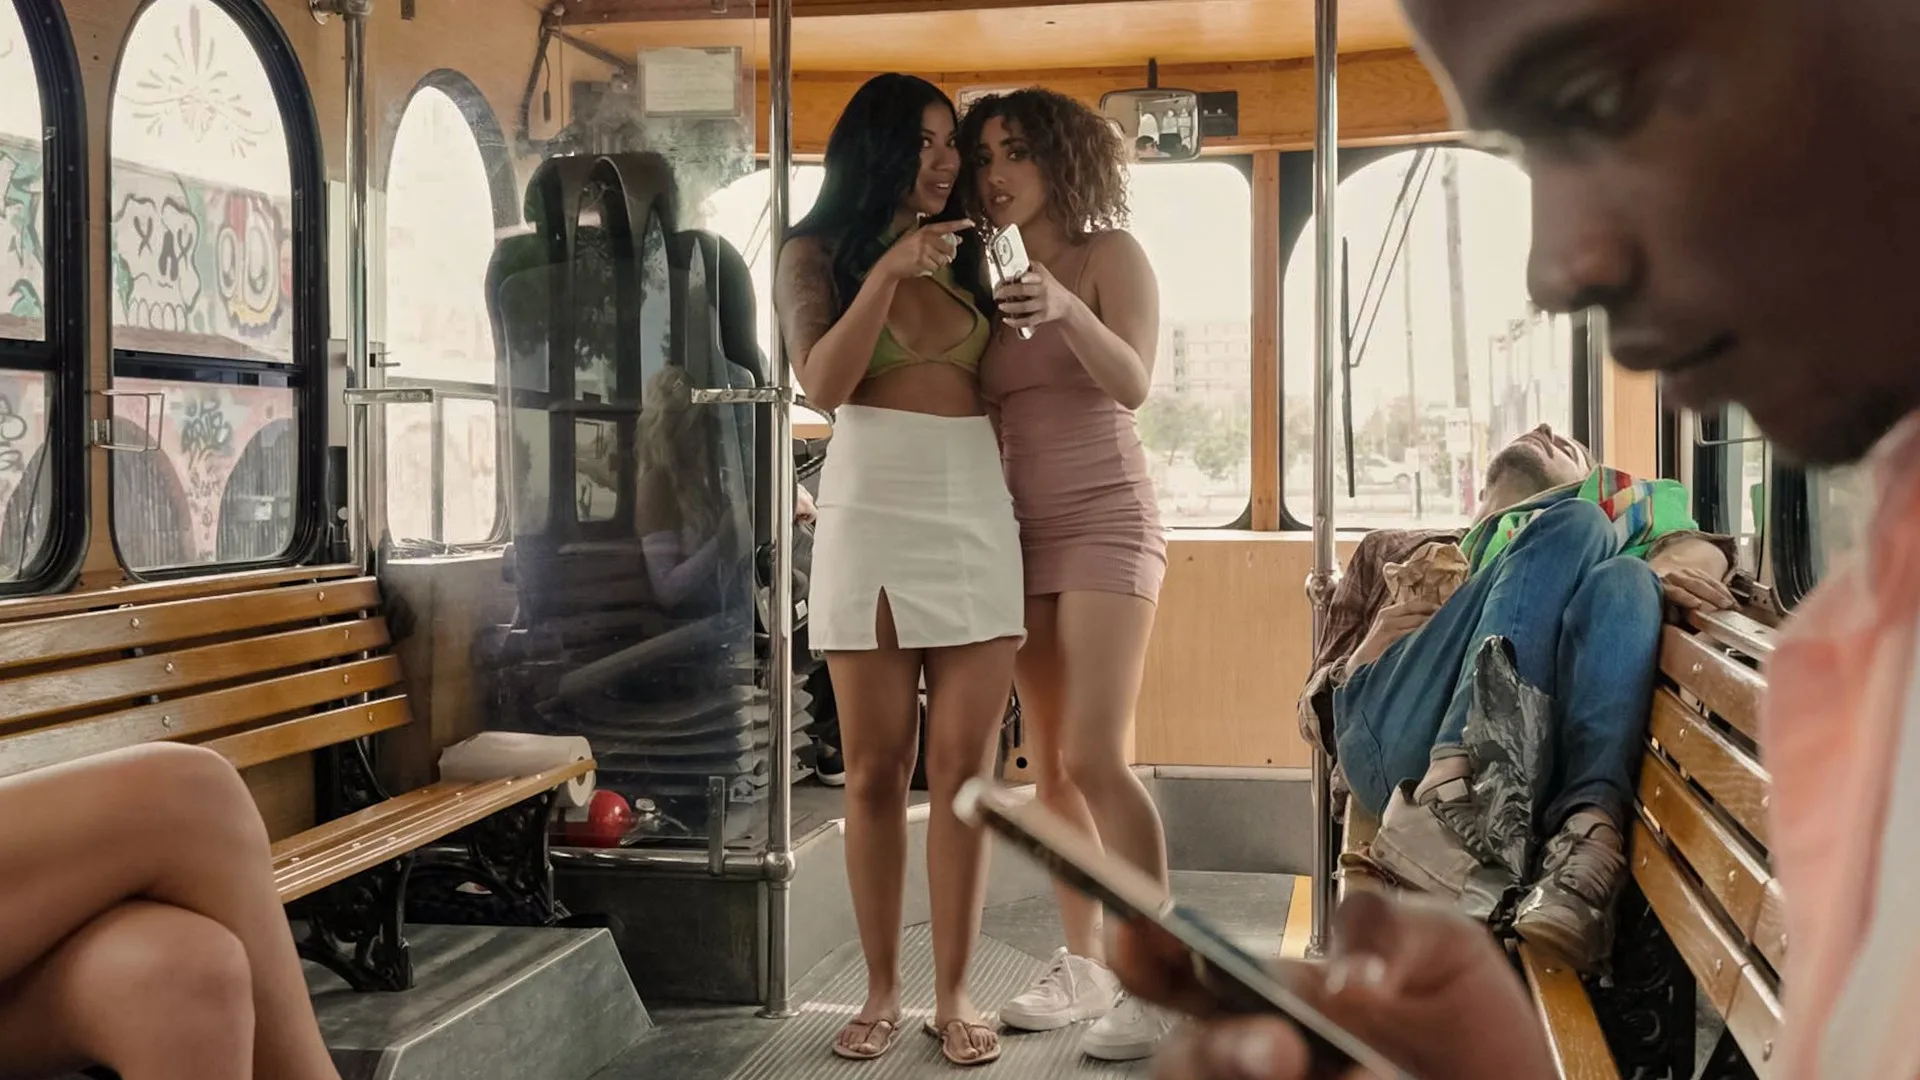 The Fucking Public Bus Threesome - RK Prime